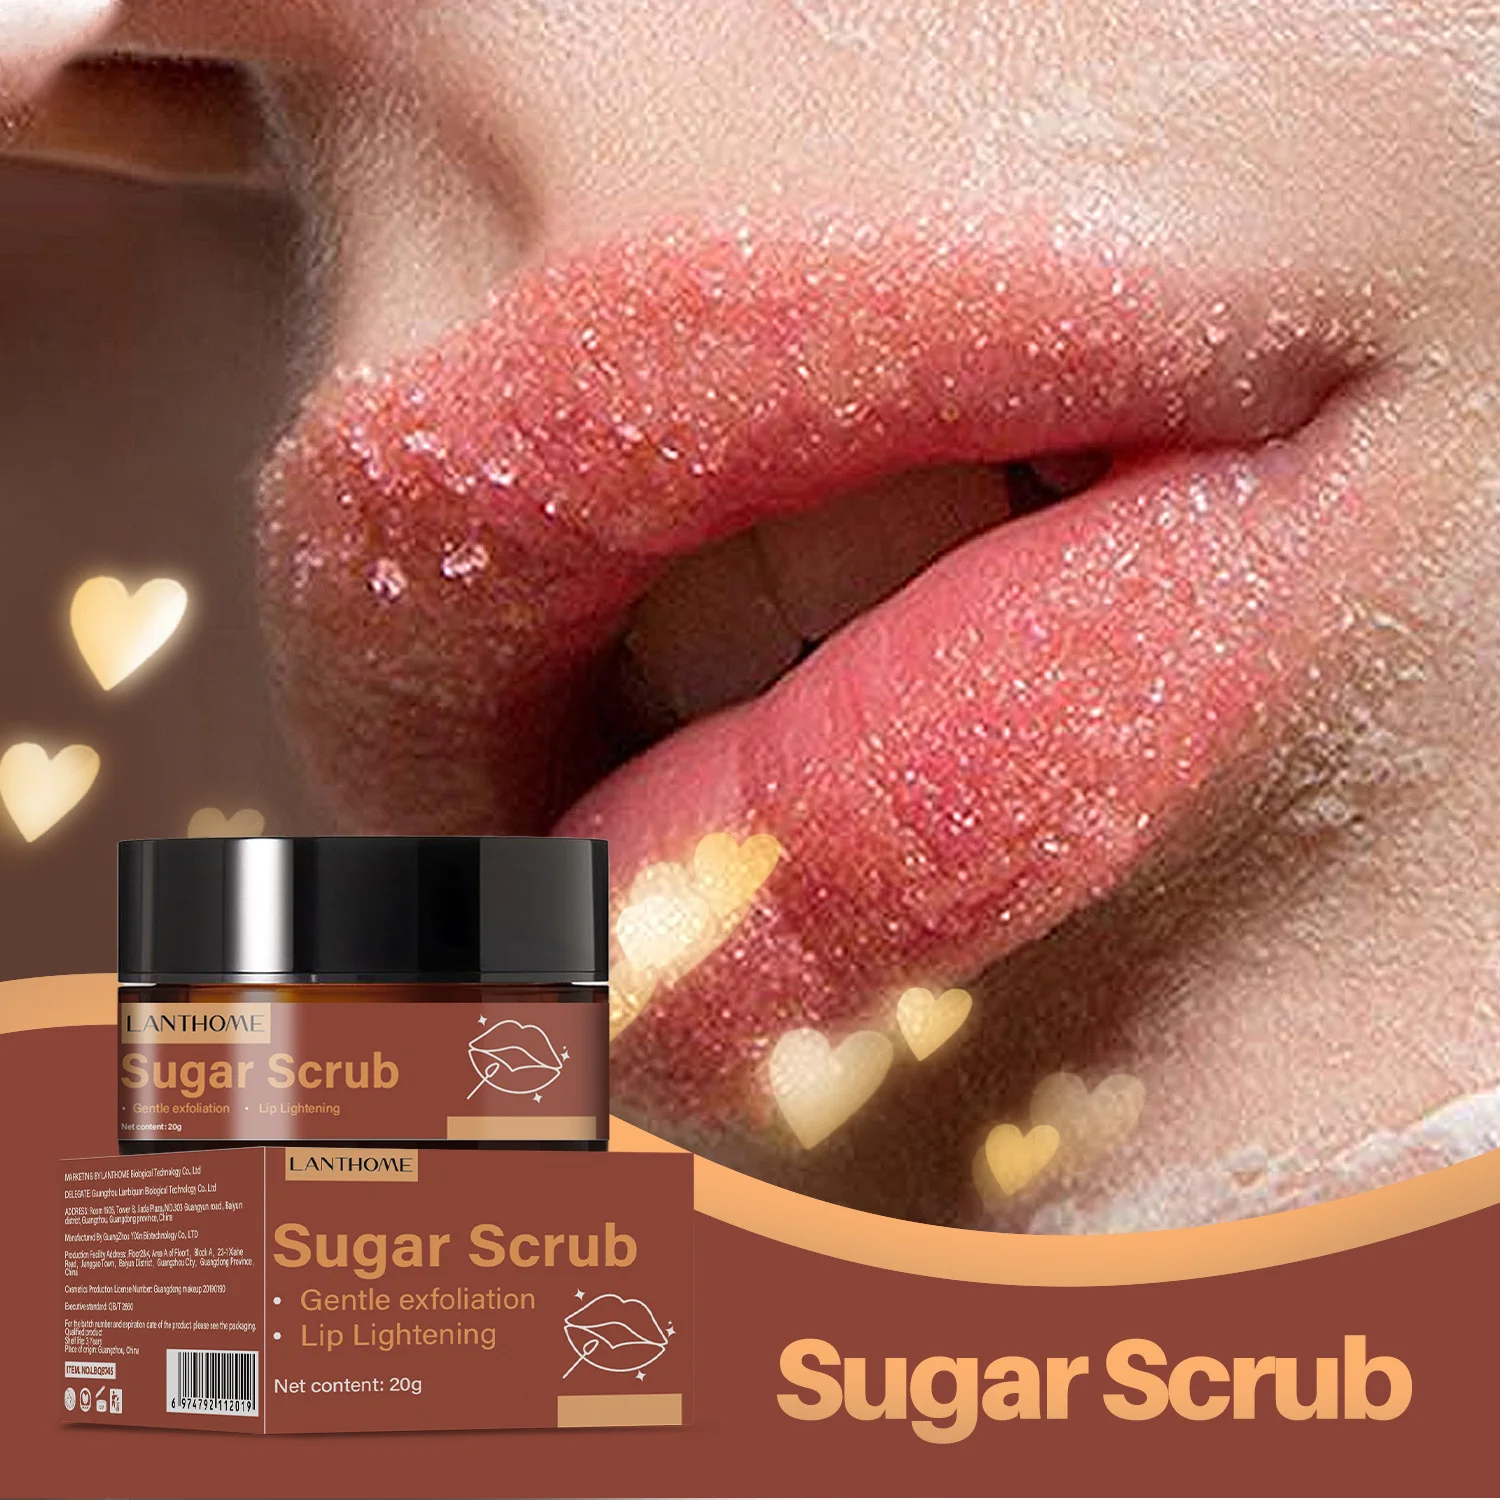 Sugar Lip Scrub Moisturizing Nourish Lips Darkness Remover Fade Fine Lines Exfoliating Brighten Pink Lips Beauty Care Products